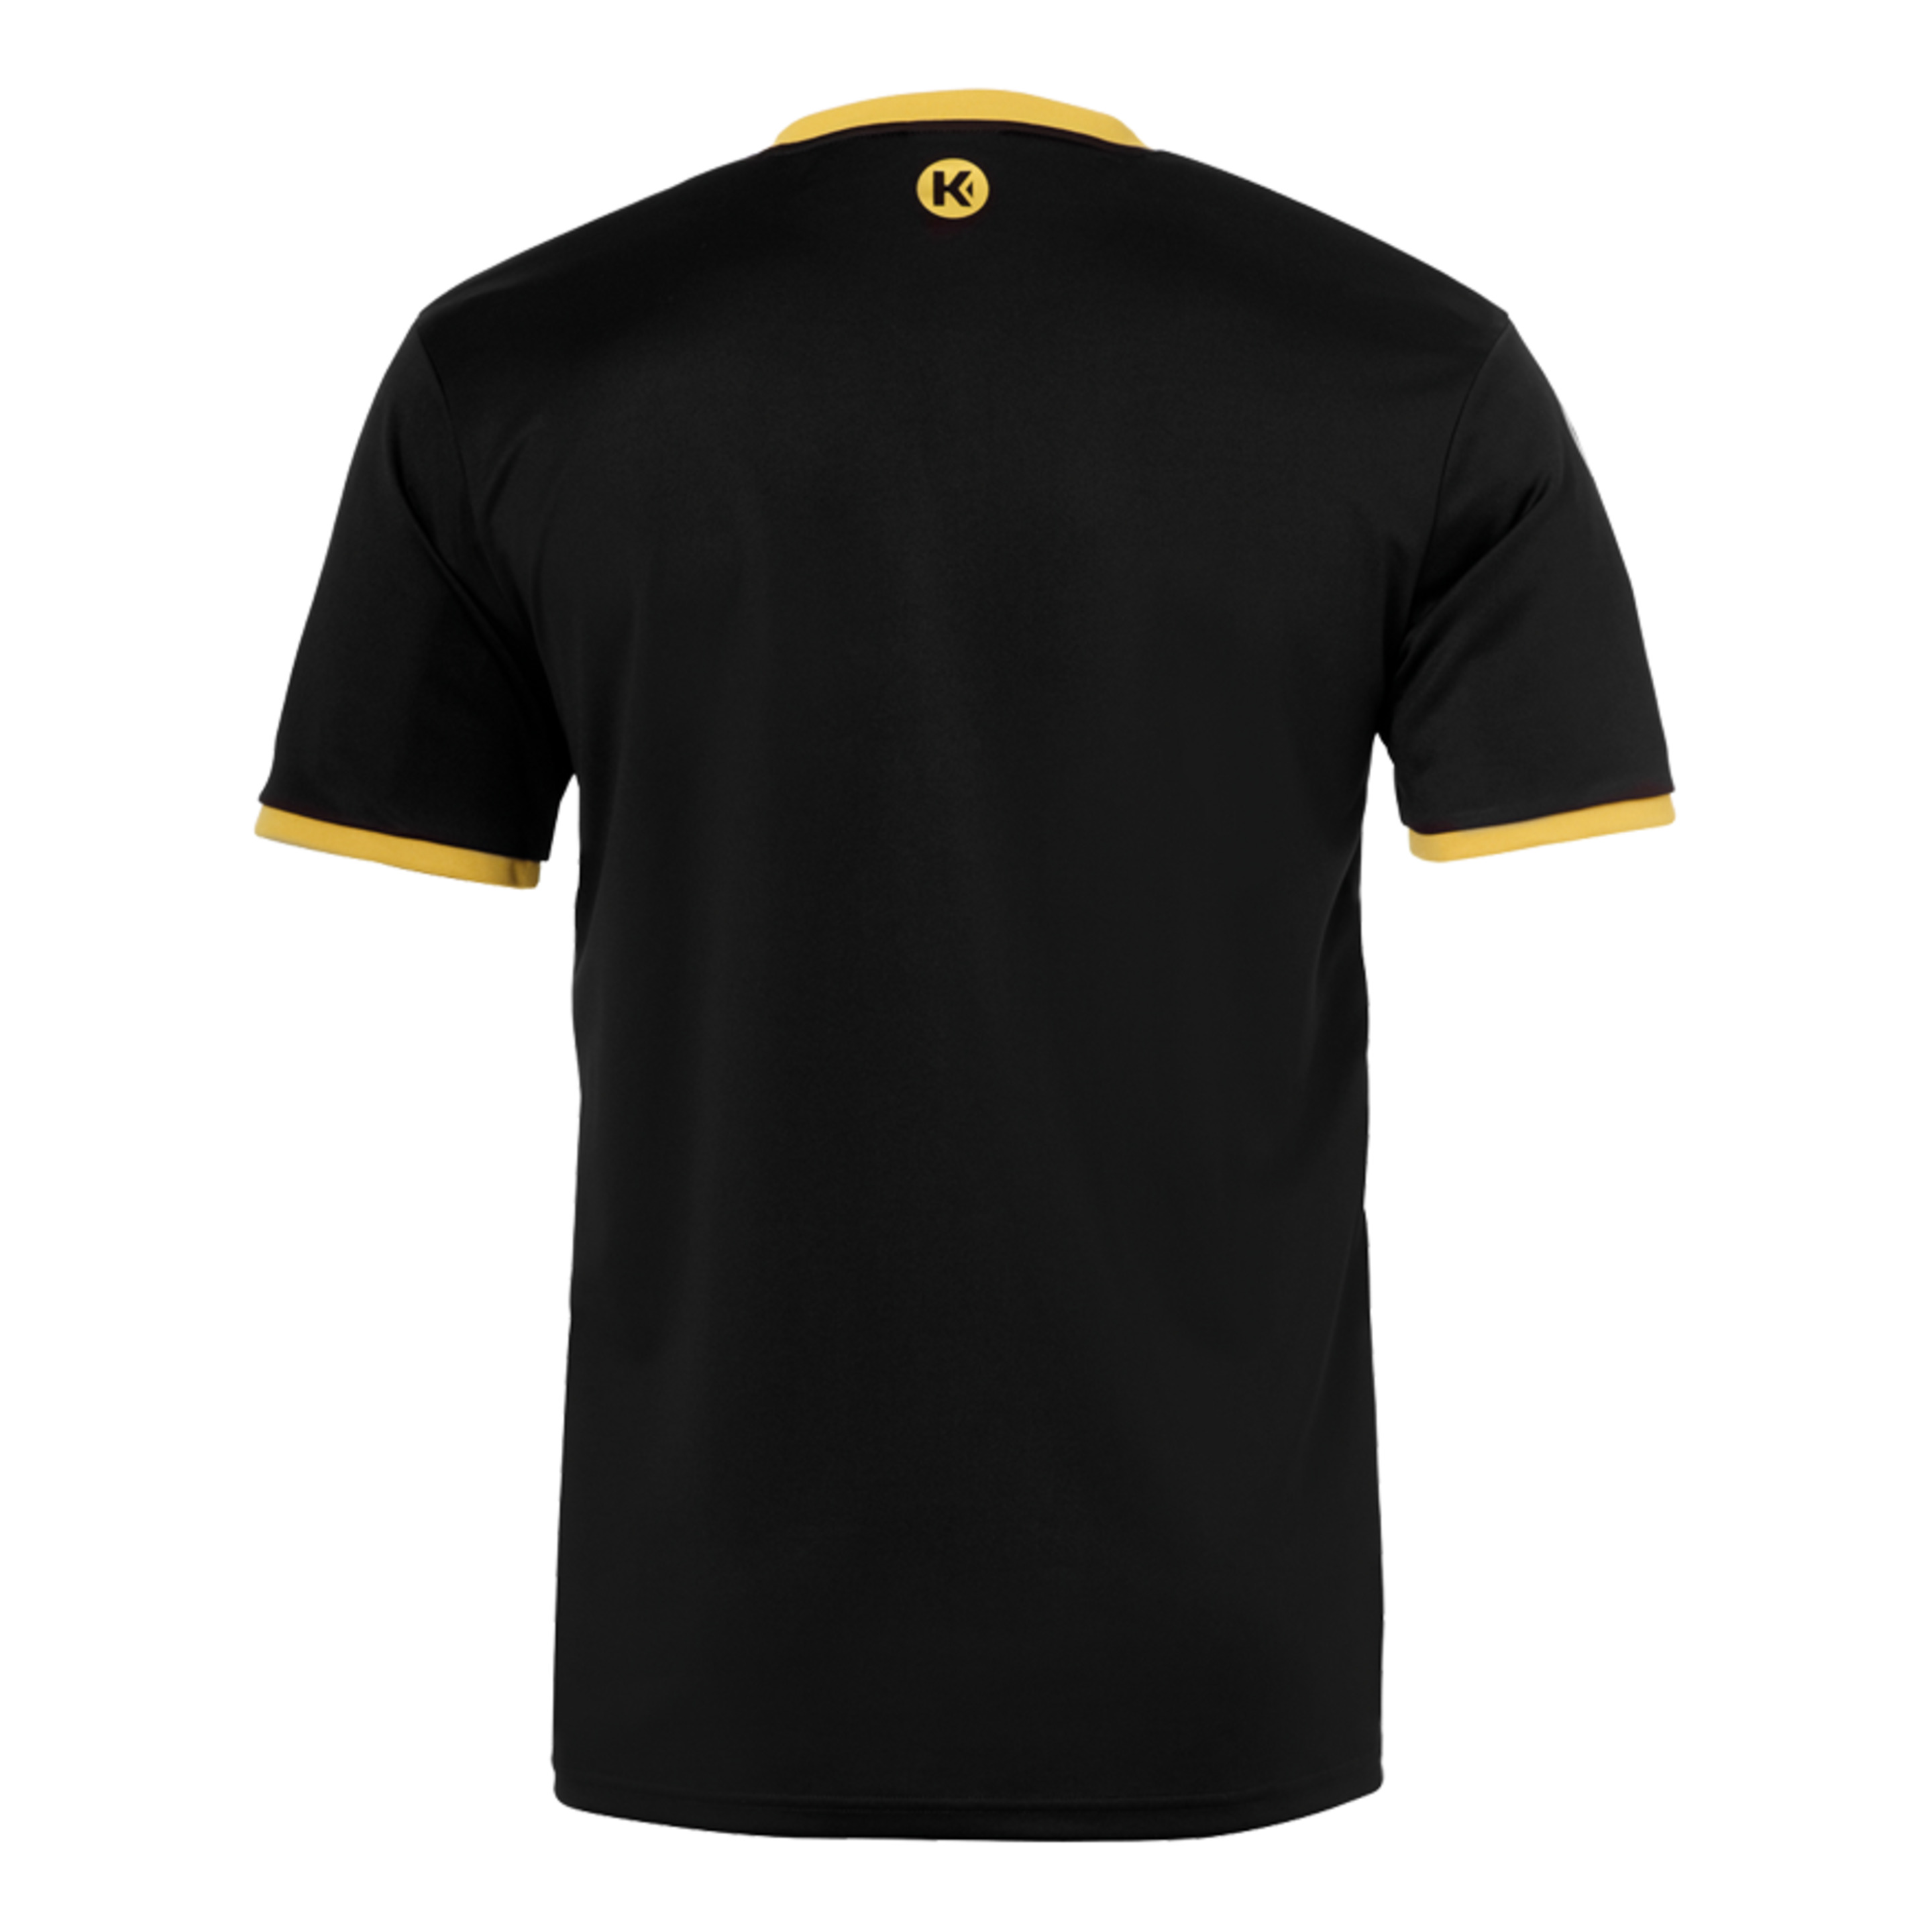 Curve Camiseta Negro/dorado Kempa - negro - Curve Camiseta Negro/dorado Kempa  MKP